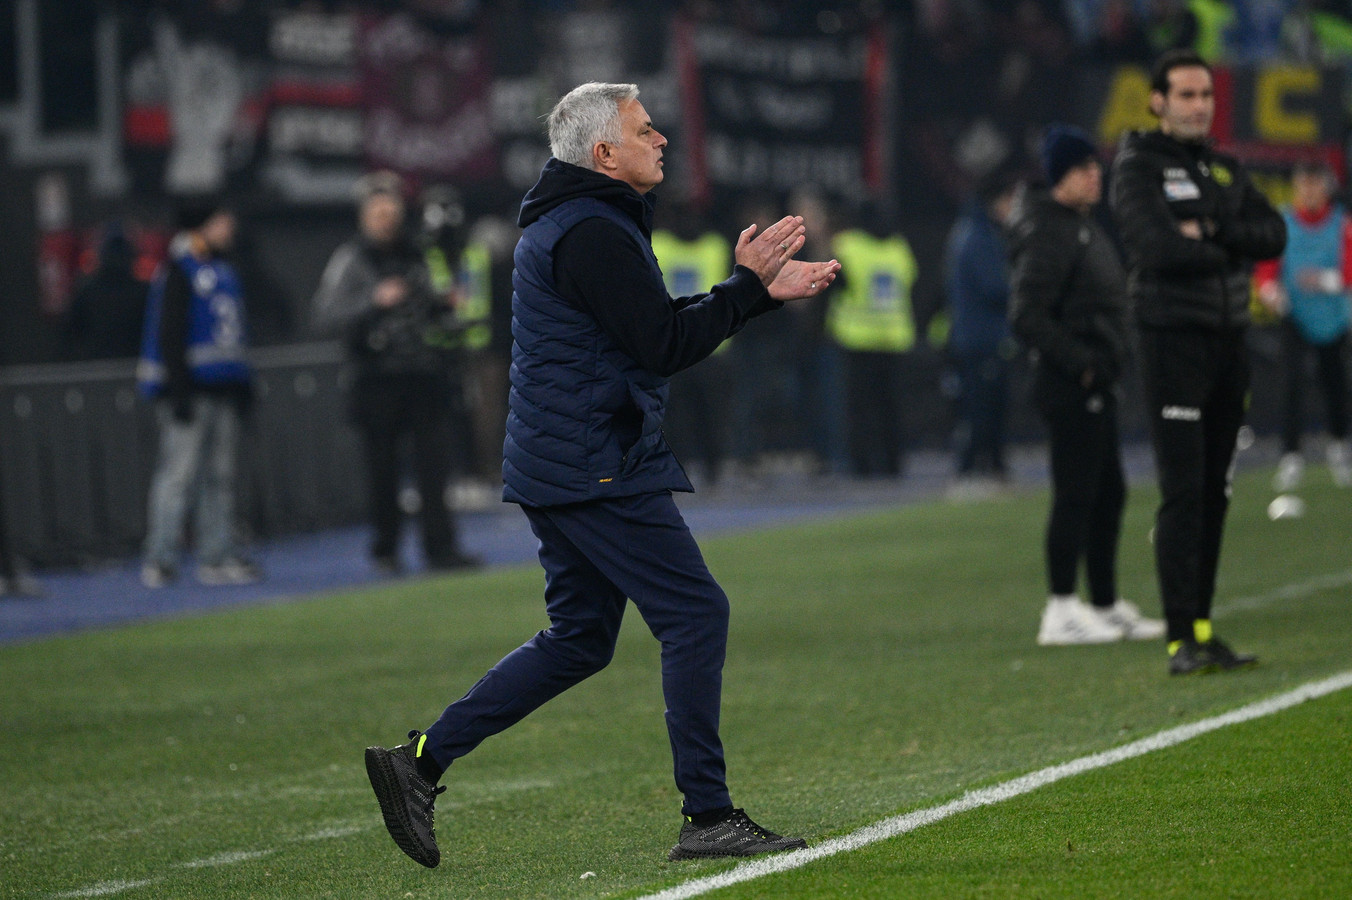 regel schot opslag Scorende Dessers knikkert AS Roma uit Italiaanse beker, Mourinho opvallend  kalm: “Geleerd om niet te klagen na nederlaag” | Foto | hln.be